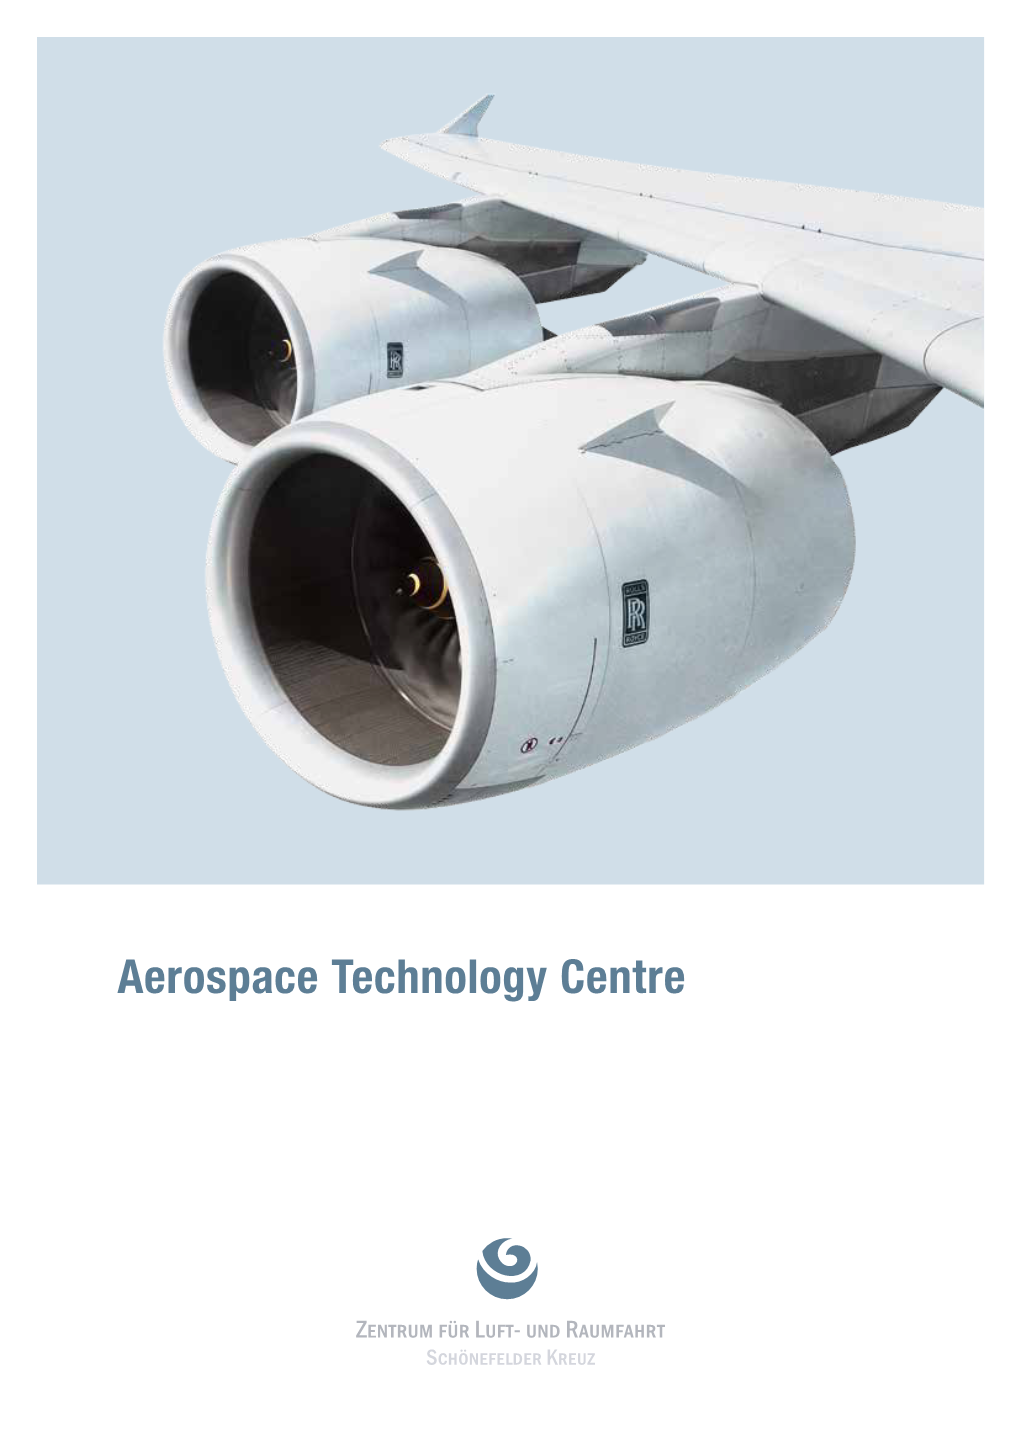 Aerospace Technology Centre WOWHERE INNOVATIONEN INNOVATIONS FLIEGEN